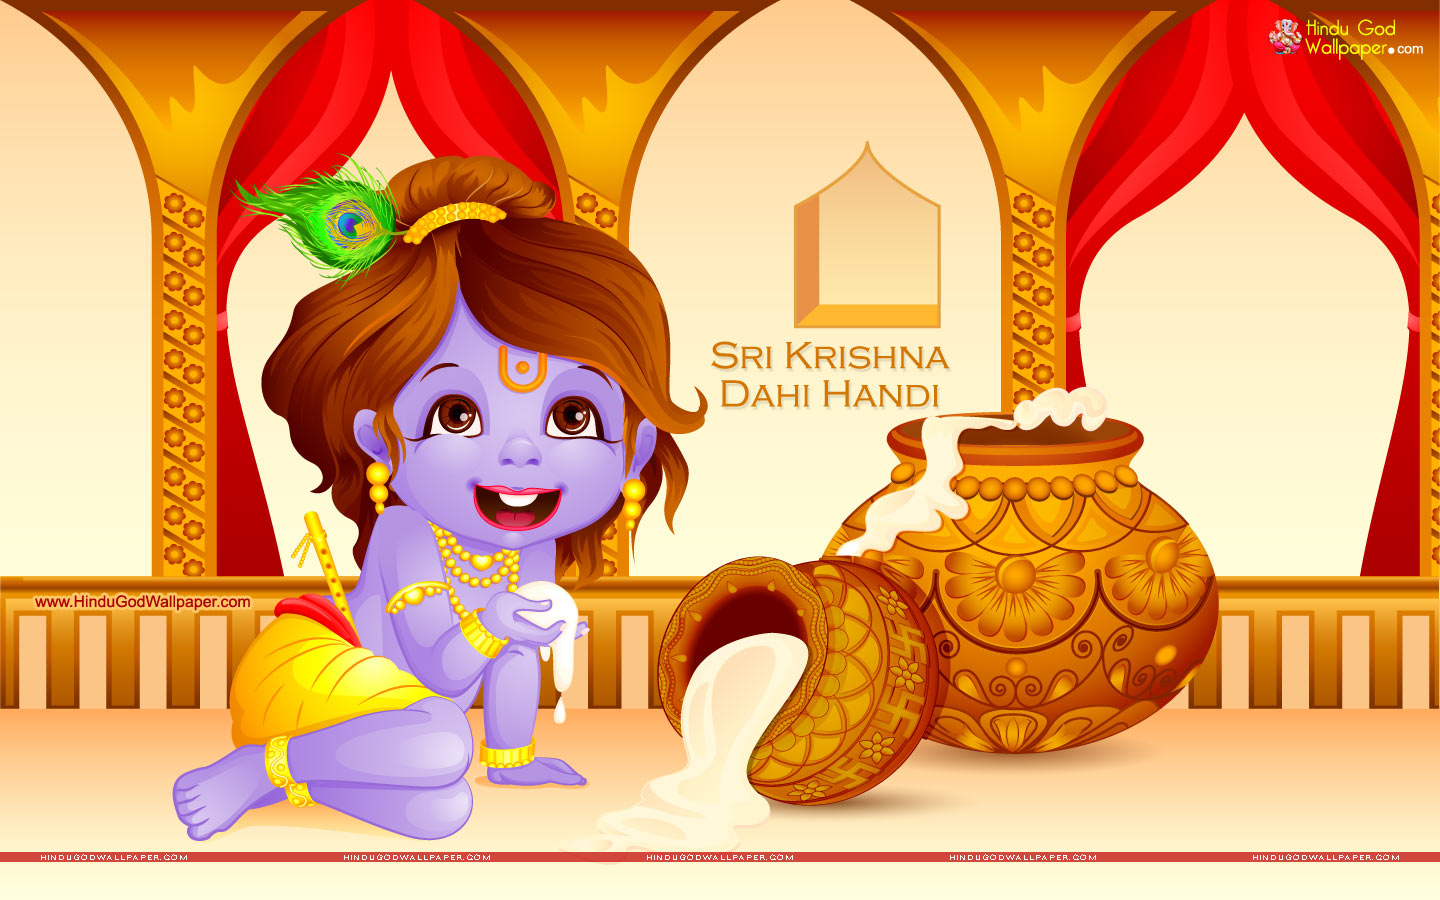 Sri Krishna Dahi Handi Wallpapers Free Download